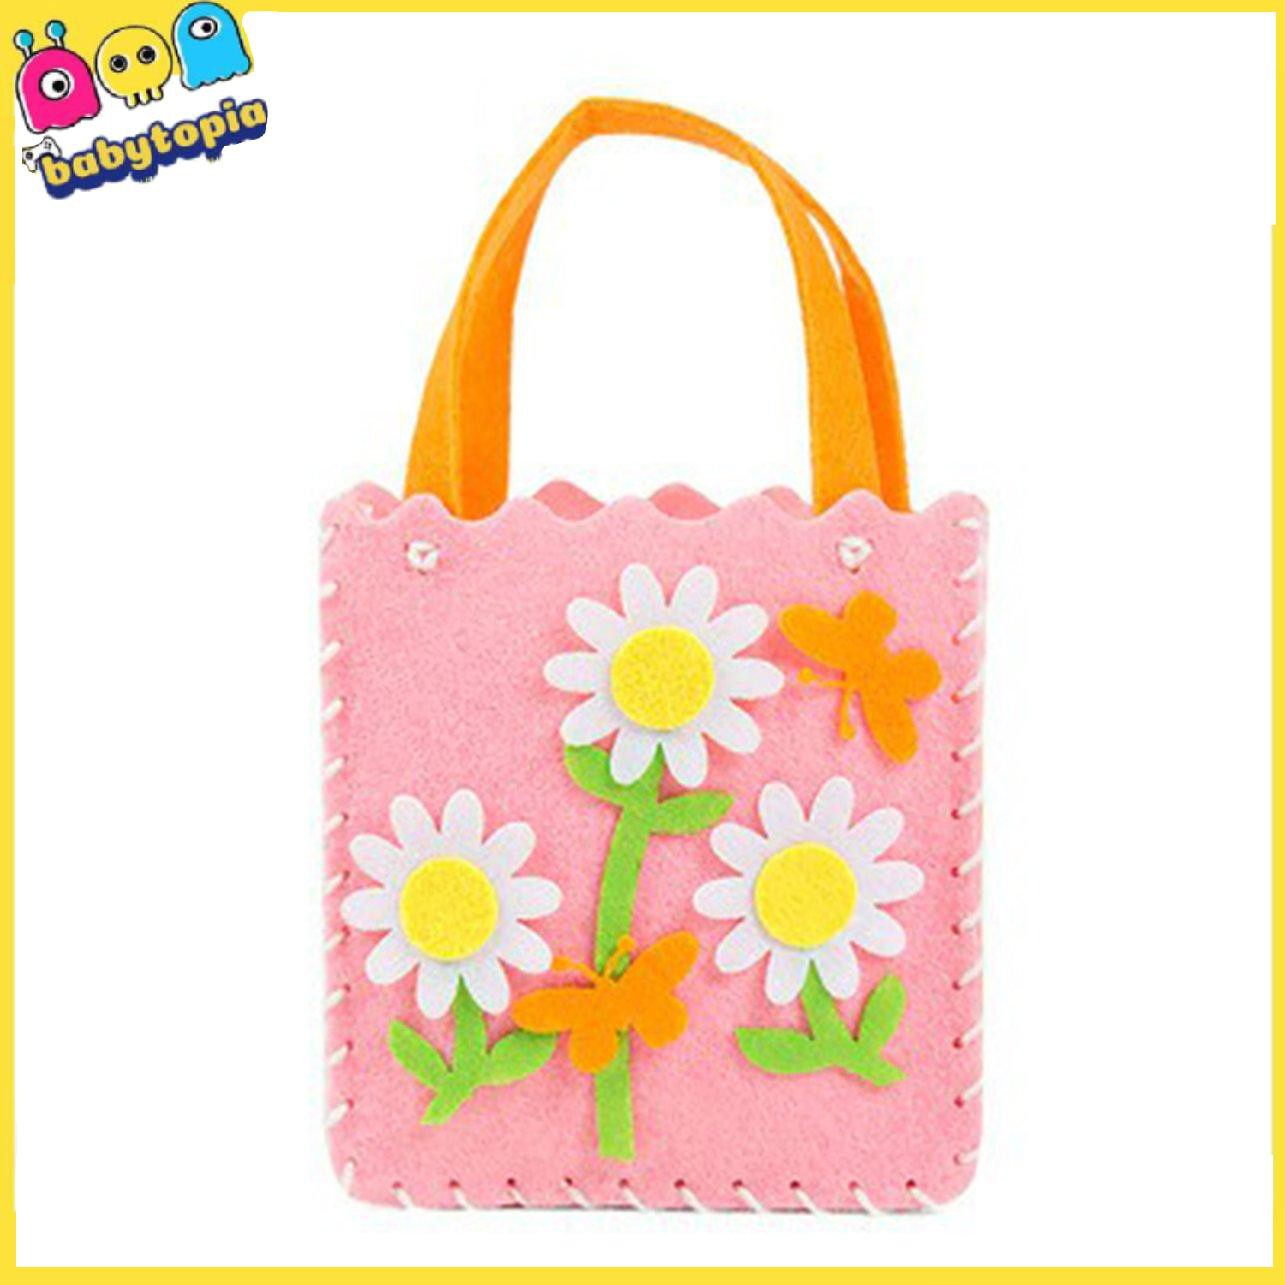 DIY Tote Bag Kindergarten Handmade Creative Paste Material Bag Candy Bag Gift Educational Toy Colorful